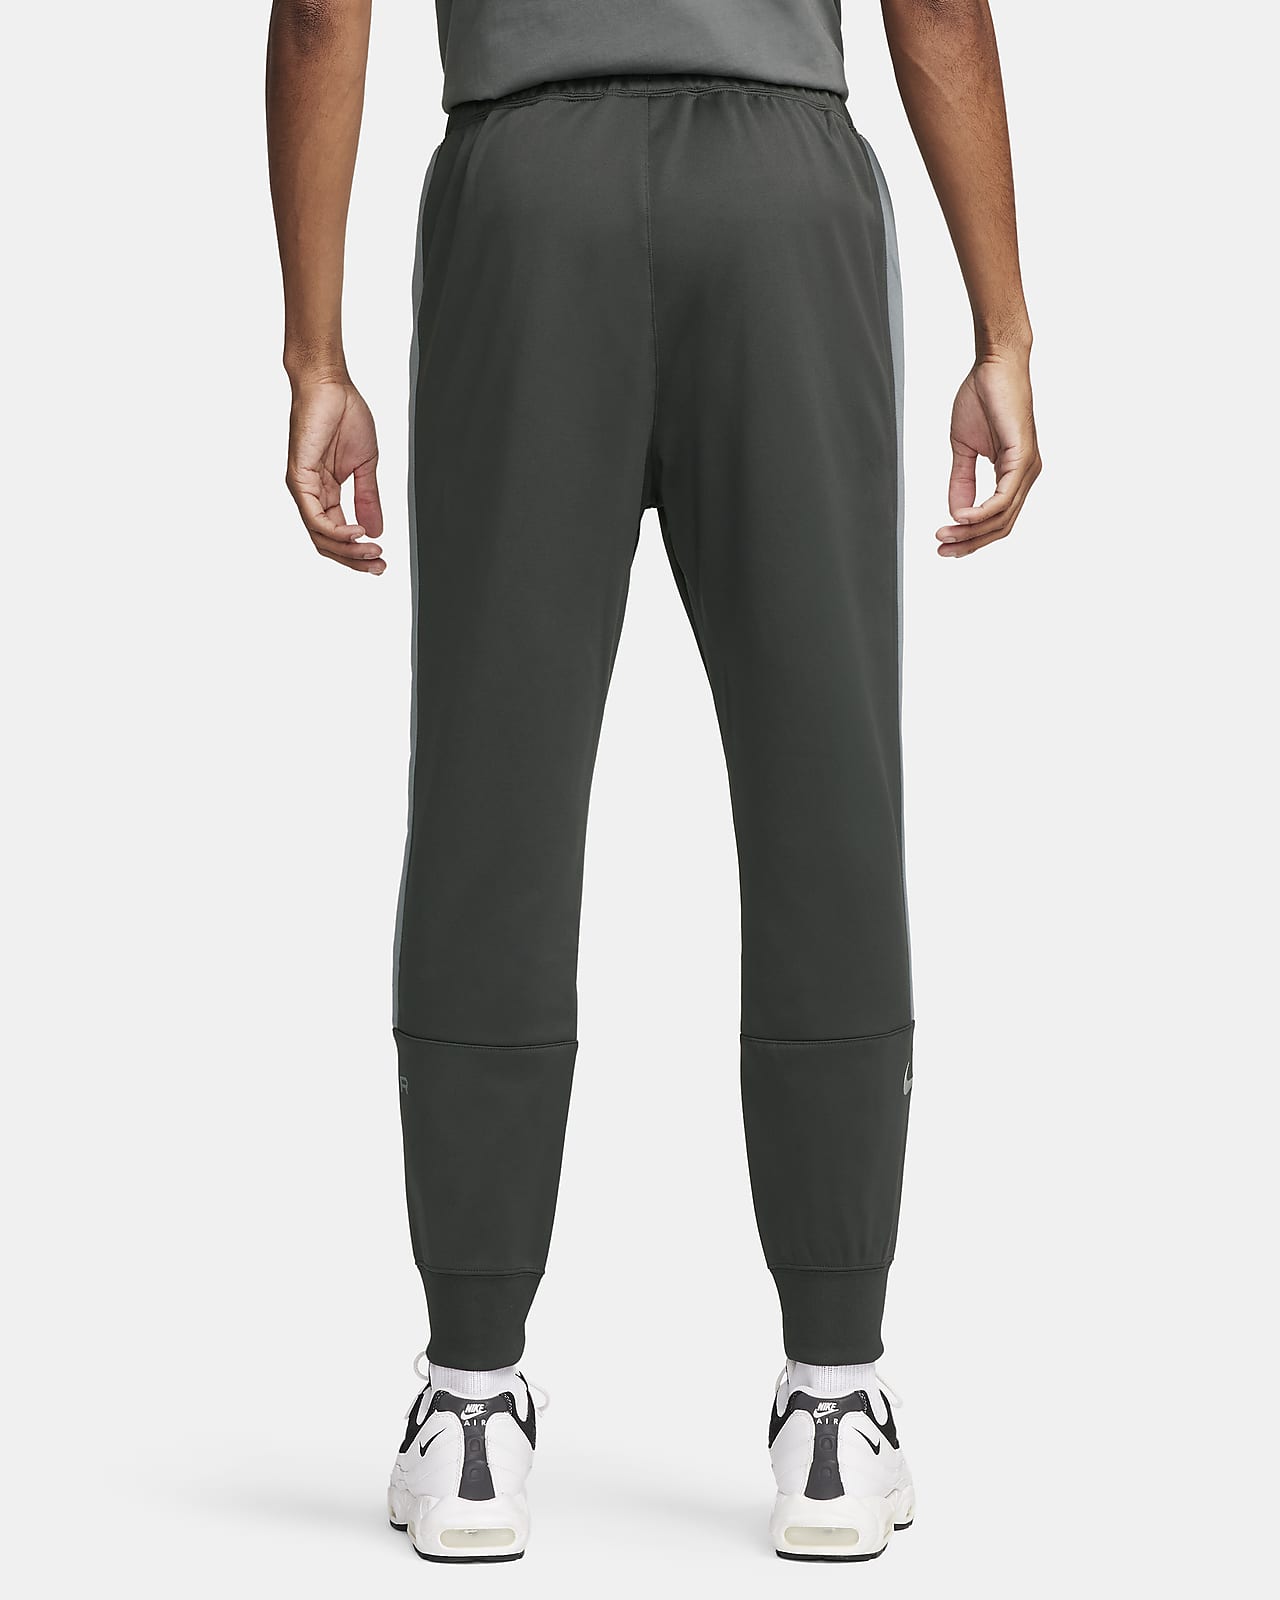 NIKE Men's Joggers Grey Tracksuit Bottoms Sweatpants Sports Gym Pants size  L 